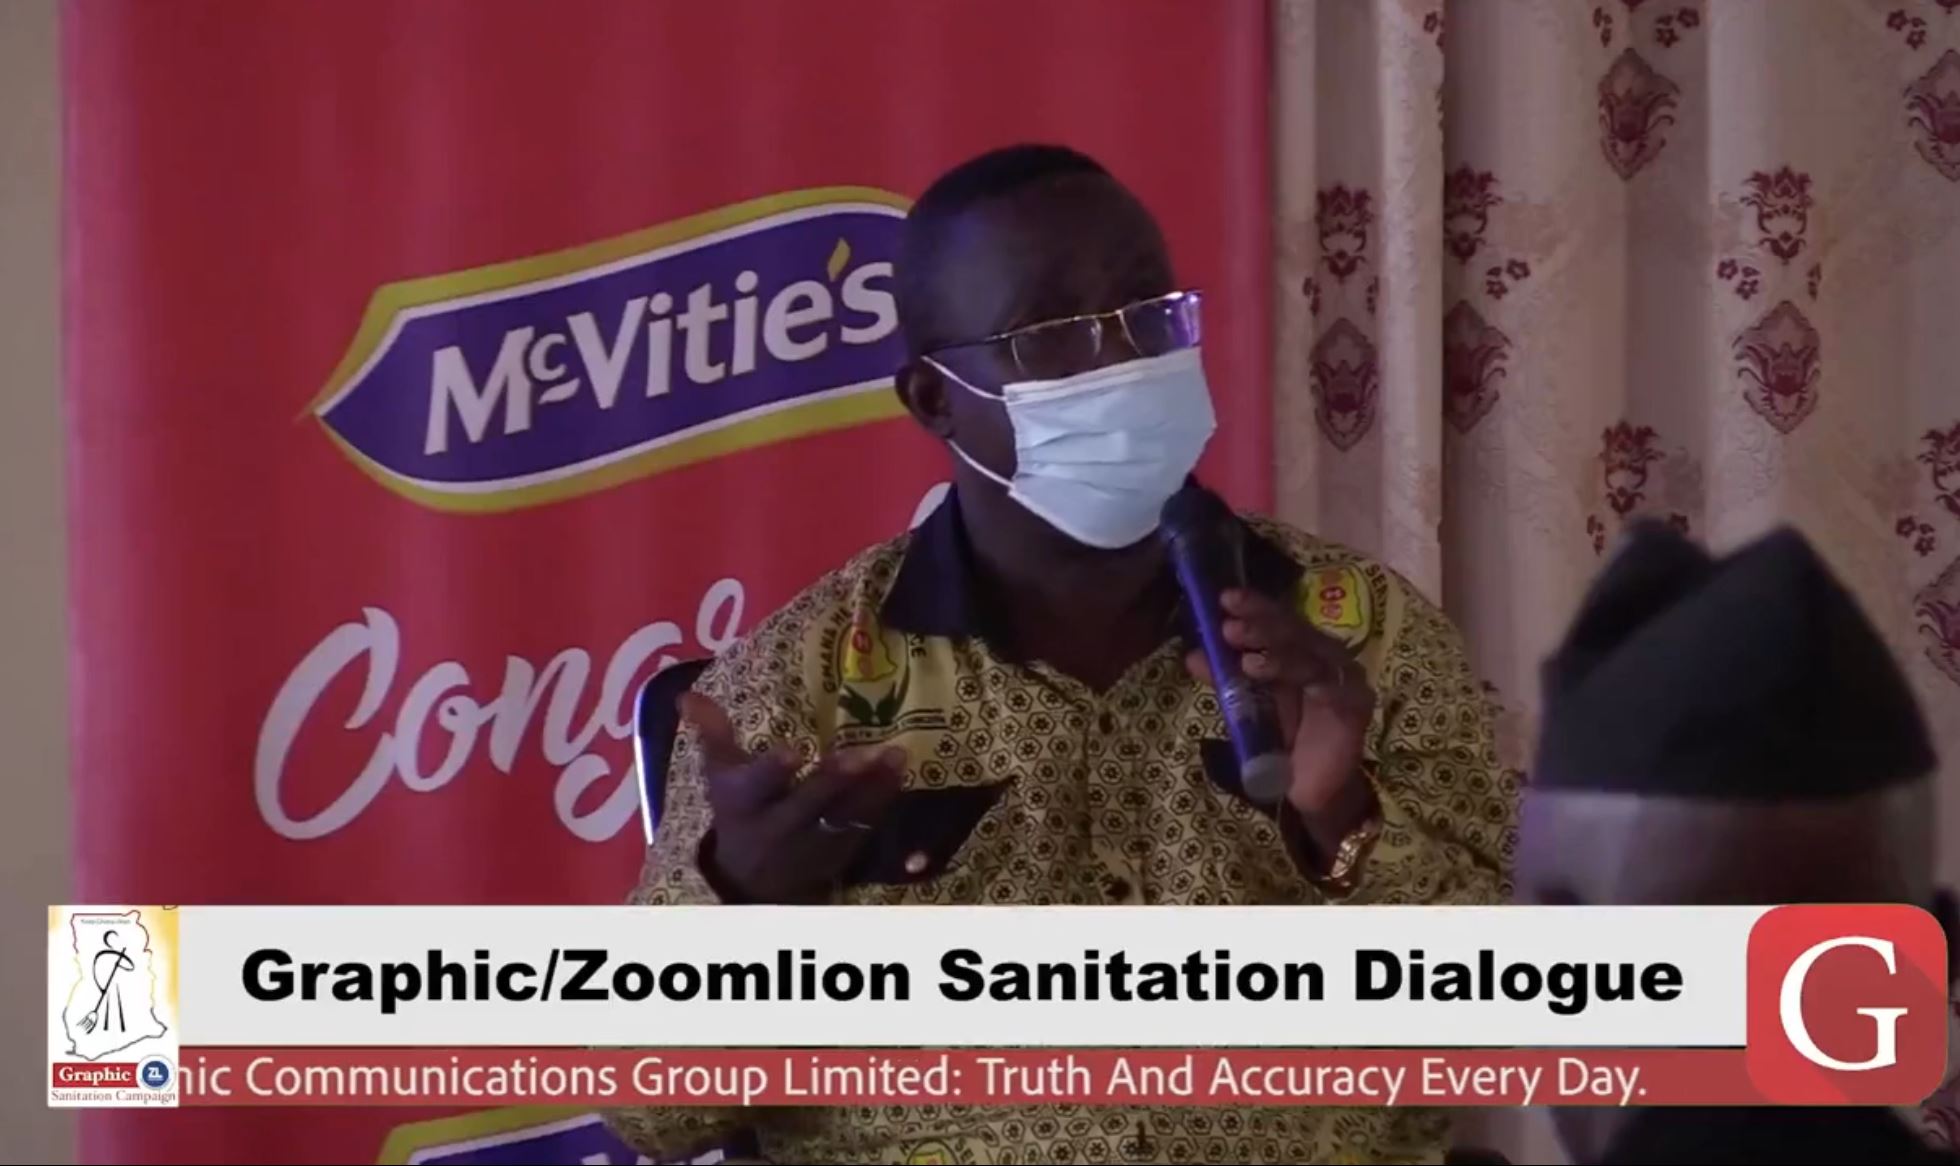 Graphic/Zoomlion Sanitation Dialogue in Ahafo Region